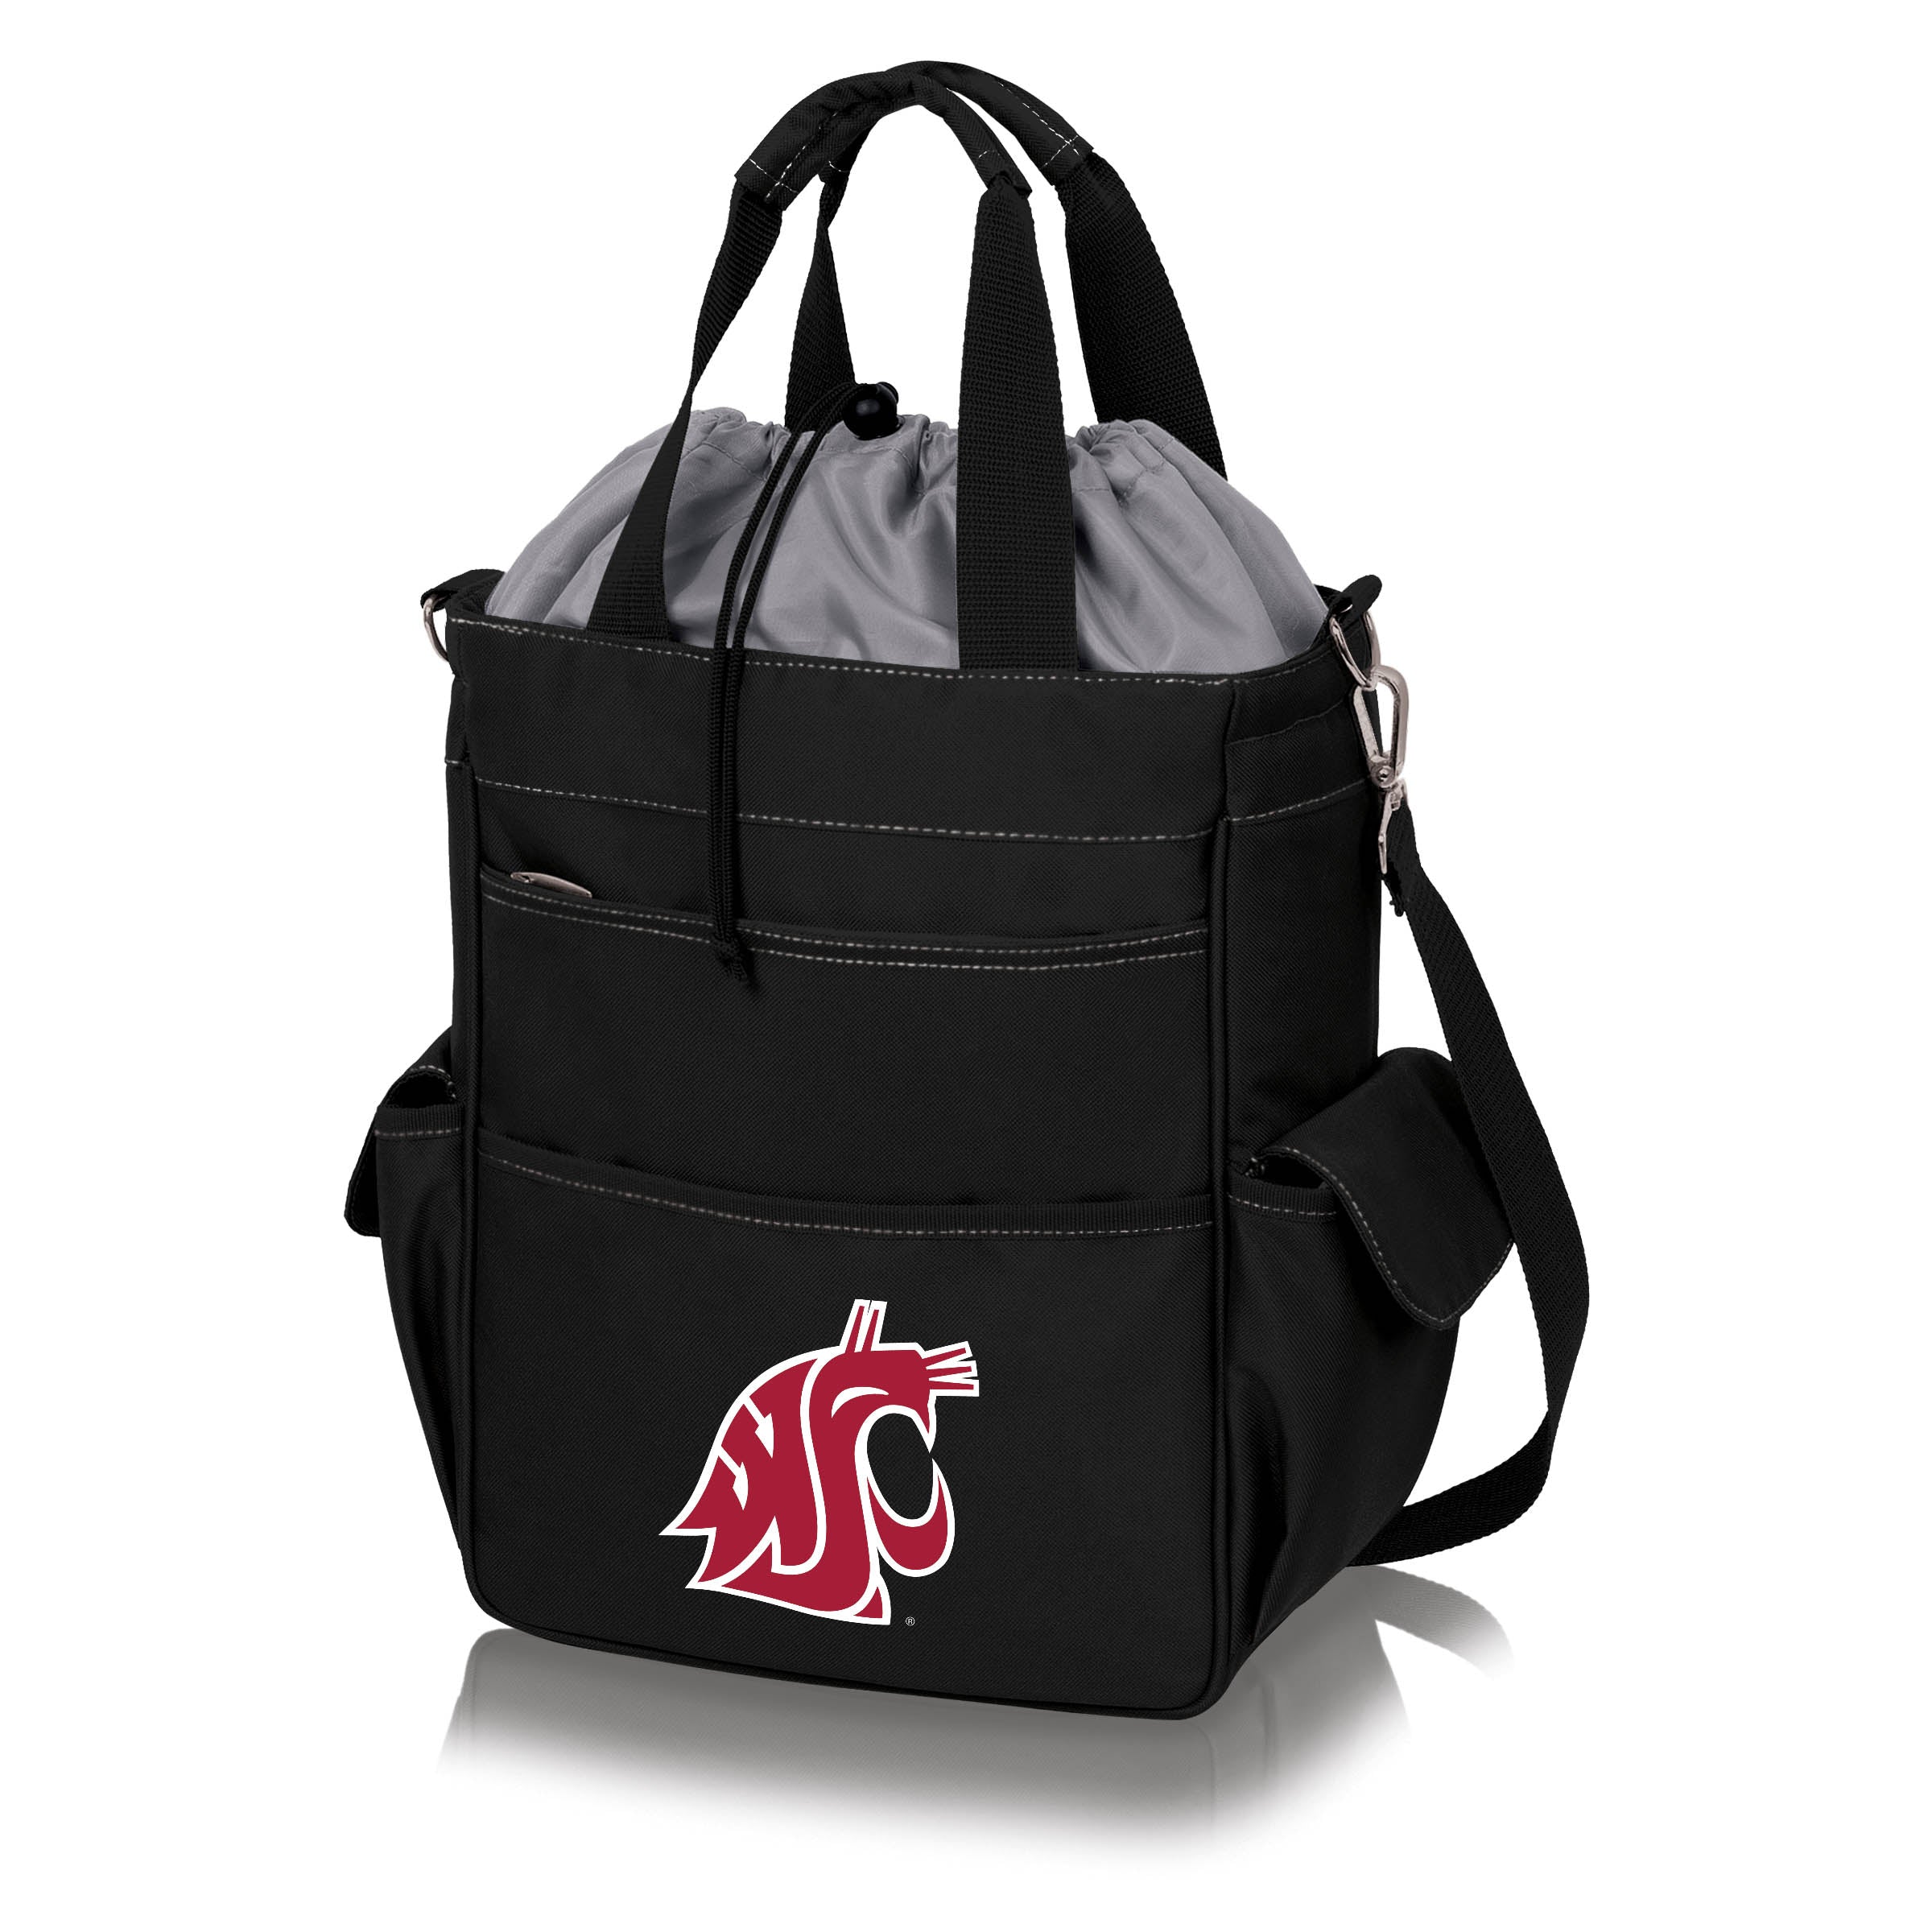 Washington State Cougars - Activo Cooler Tote Bag